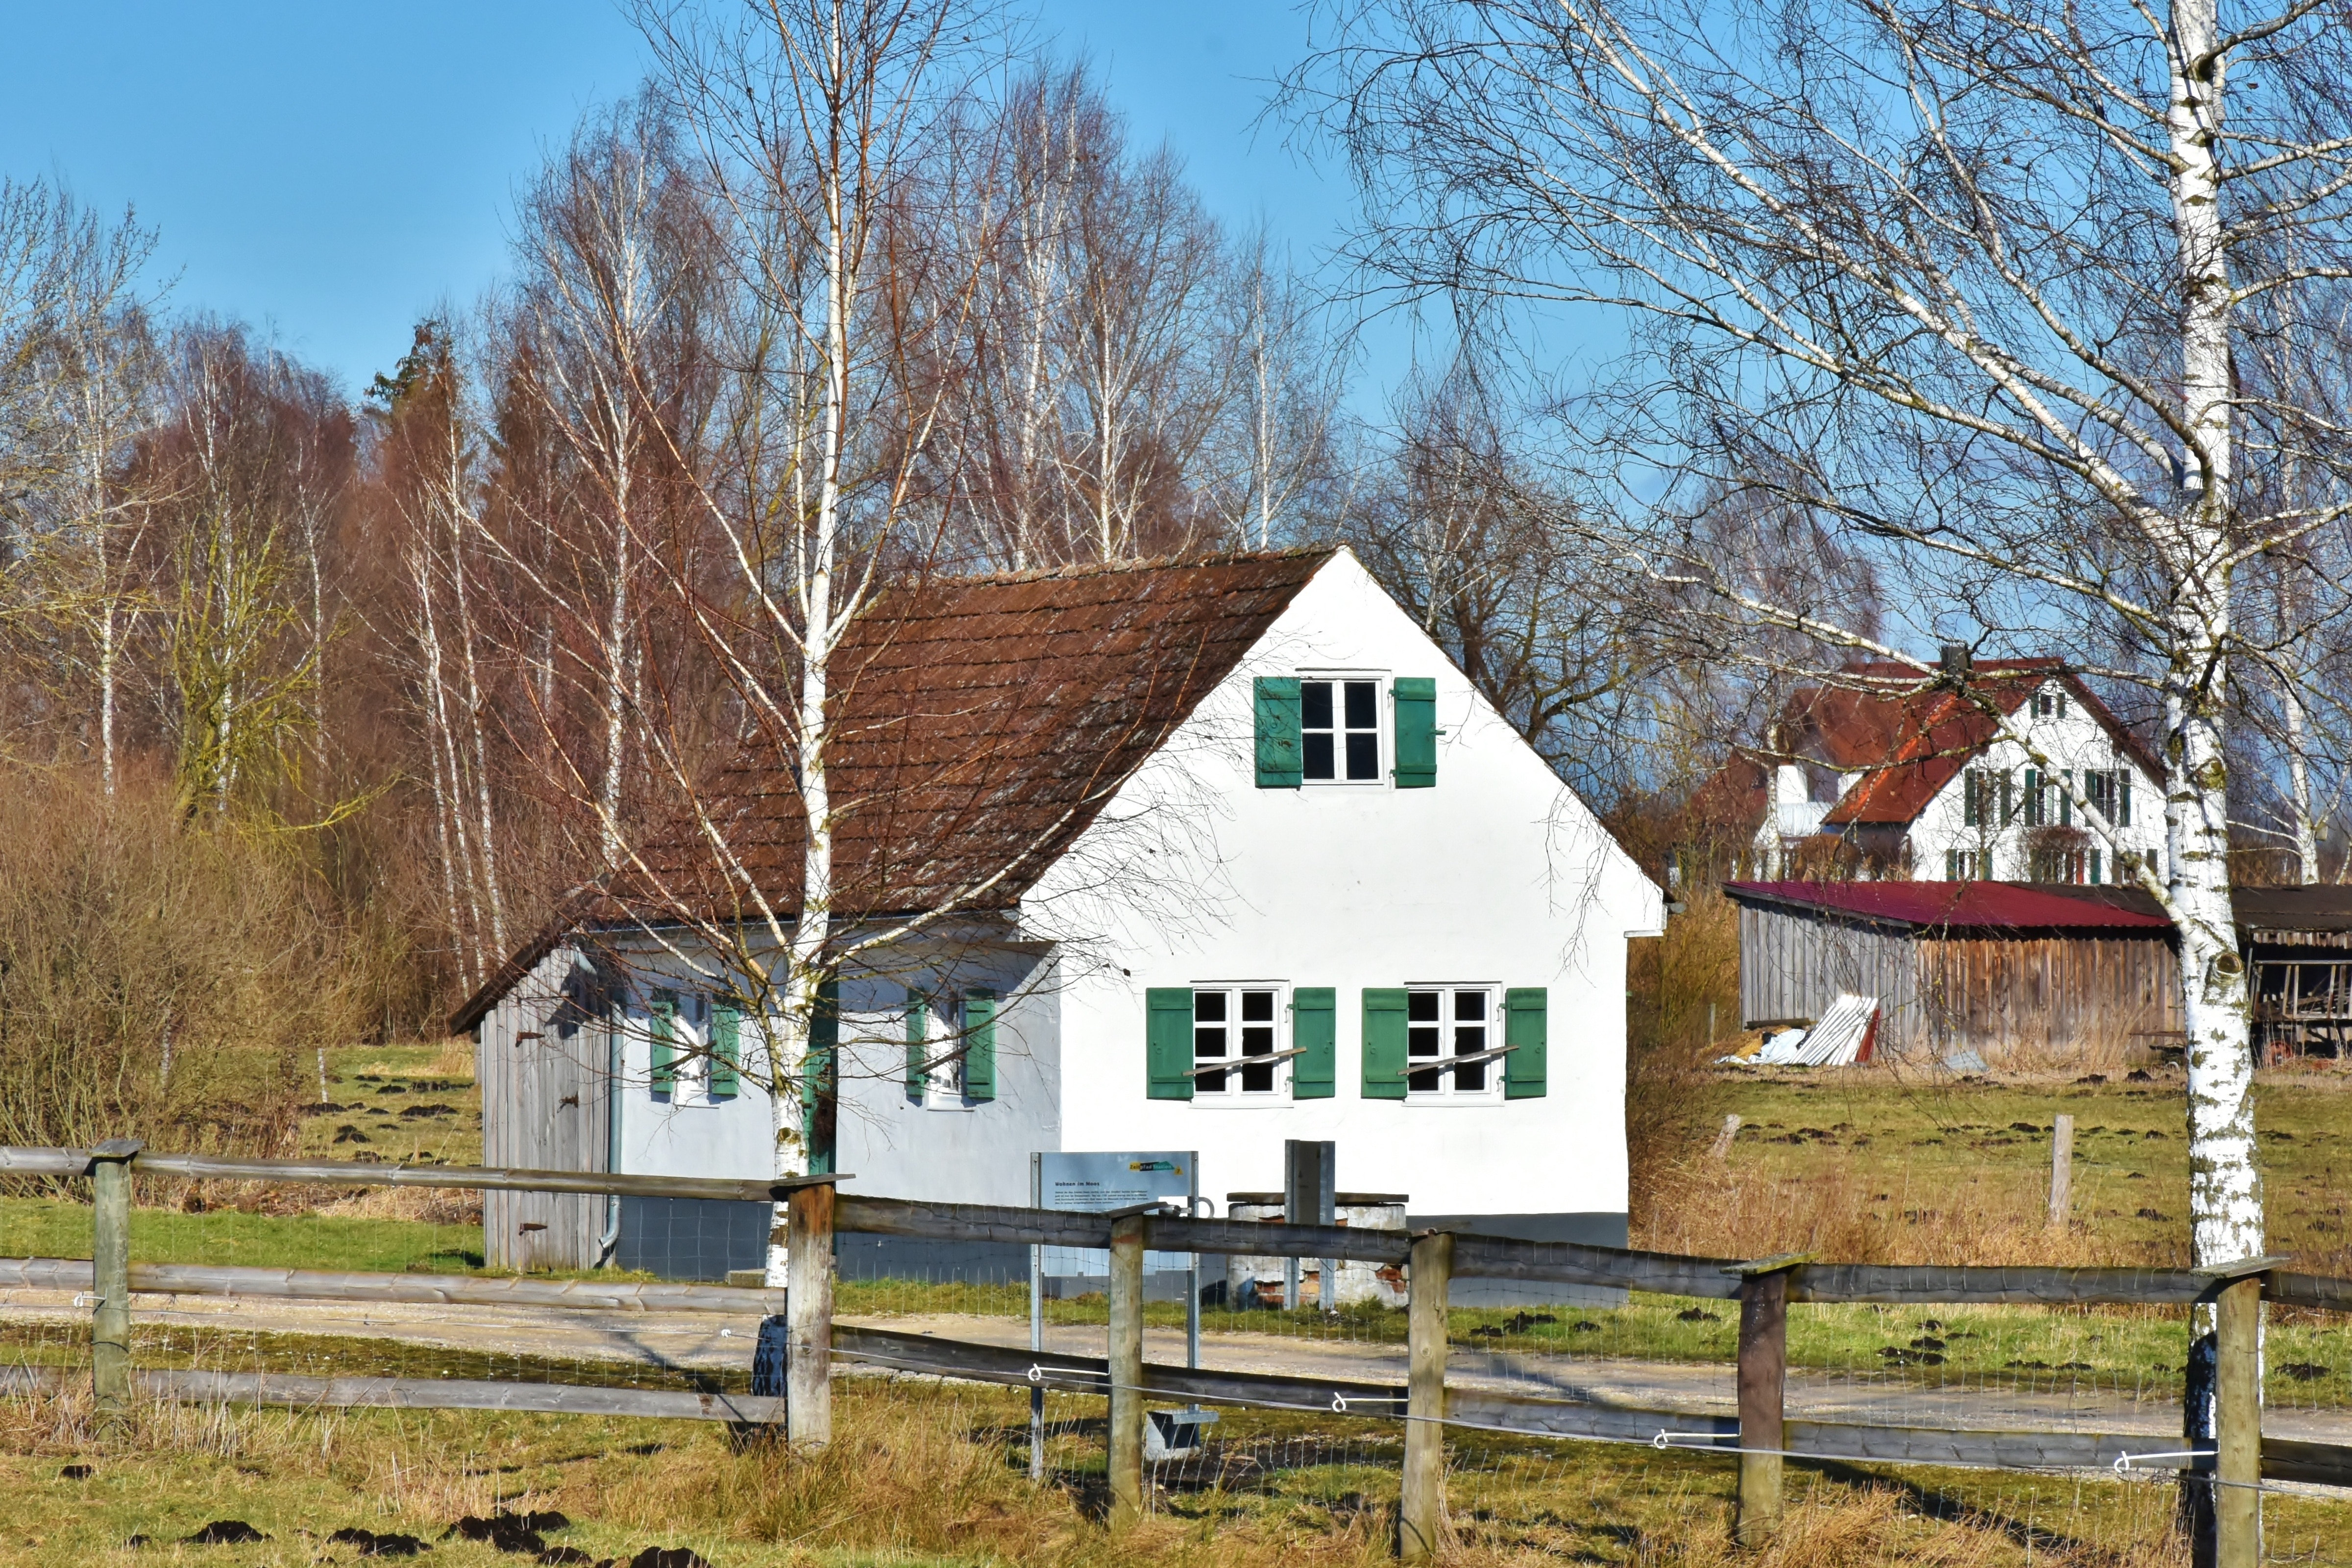 Farm, Bauerhofmuseum, Barn, Stone, Rural, house, bare tree